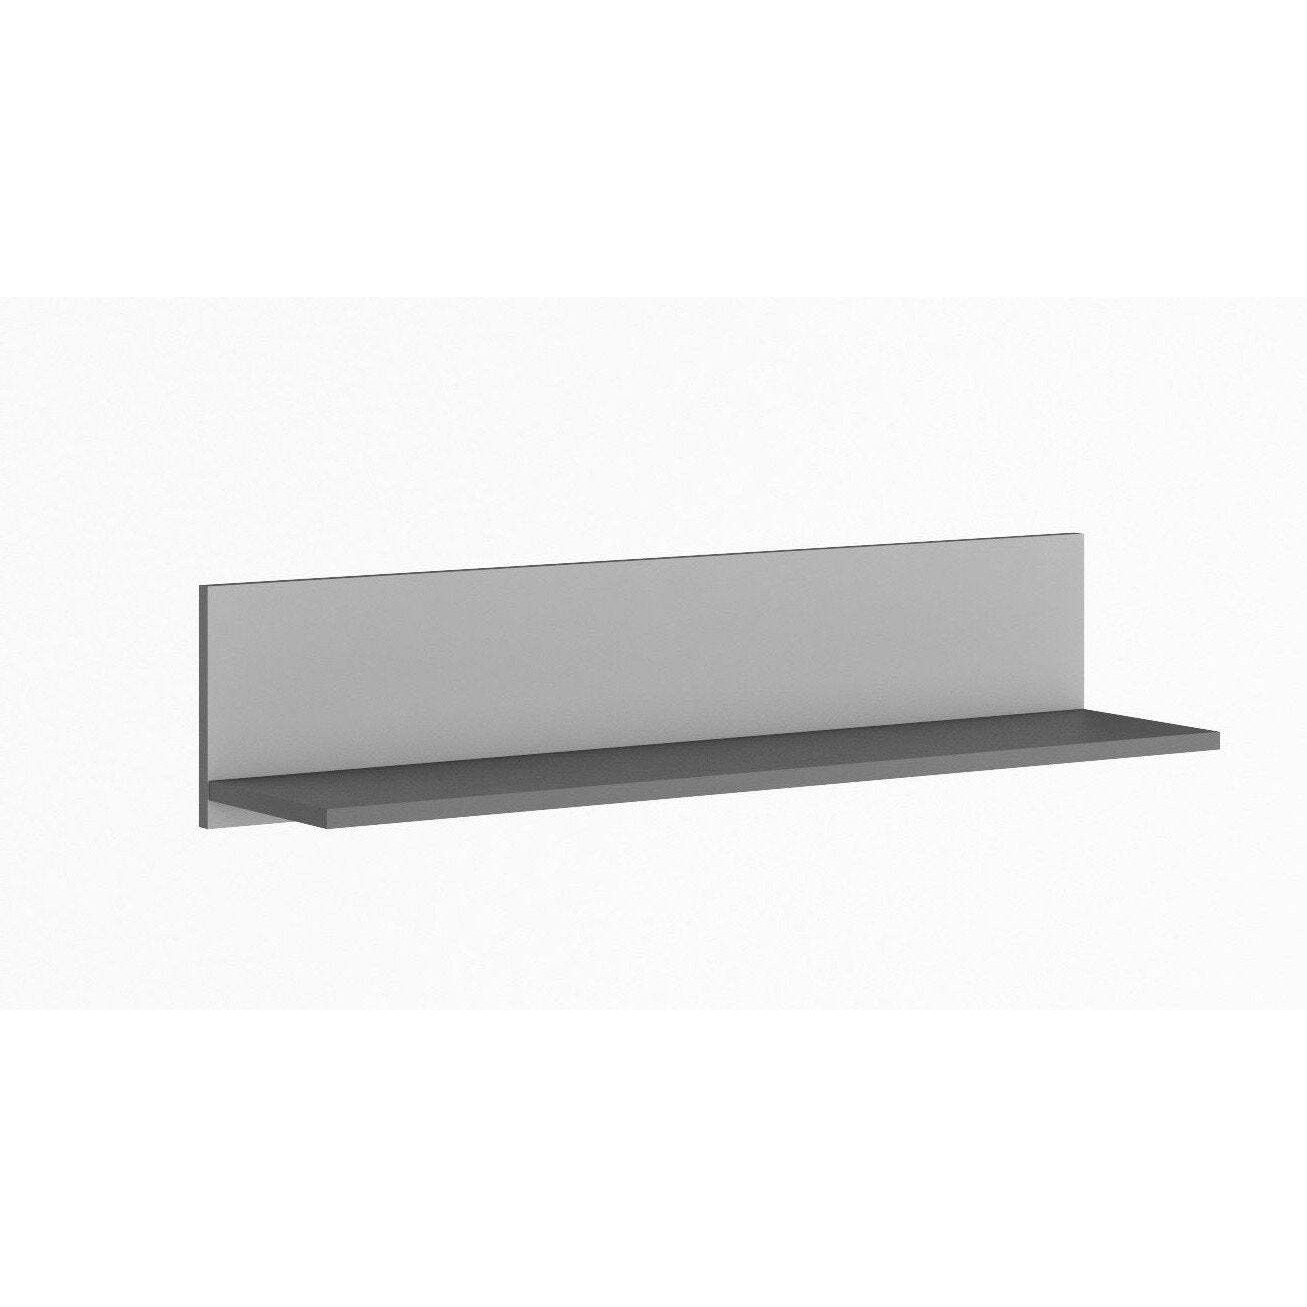 Pok PO-12 Wall Shelf 90cm - Grey Matt 90cm - image 1